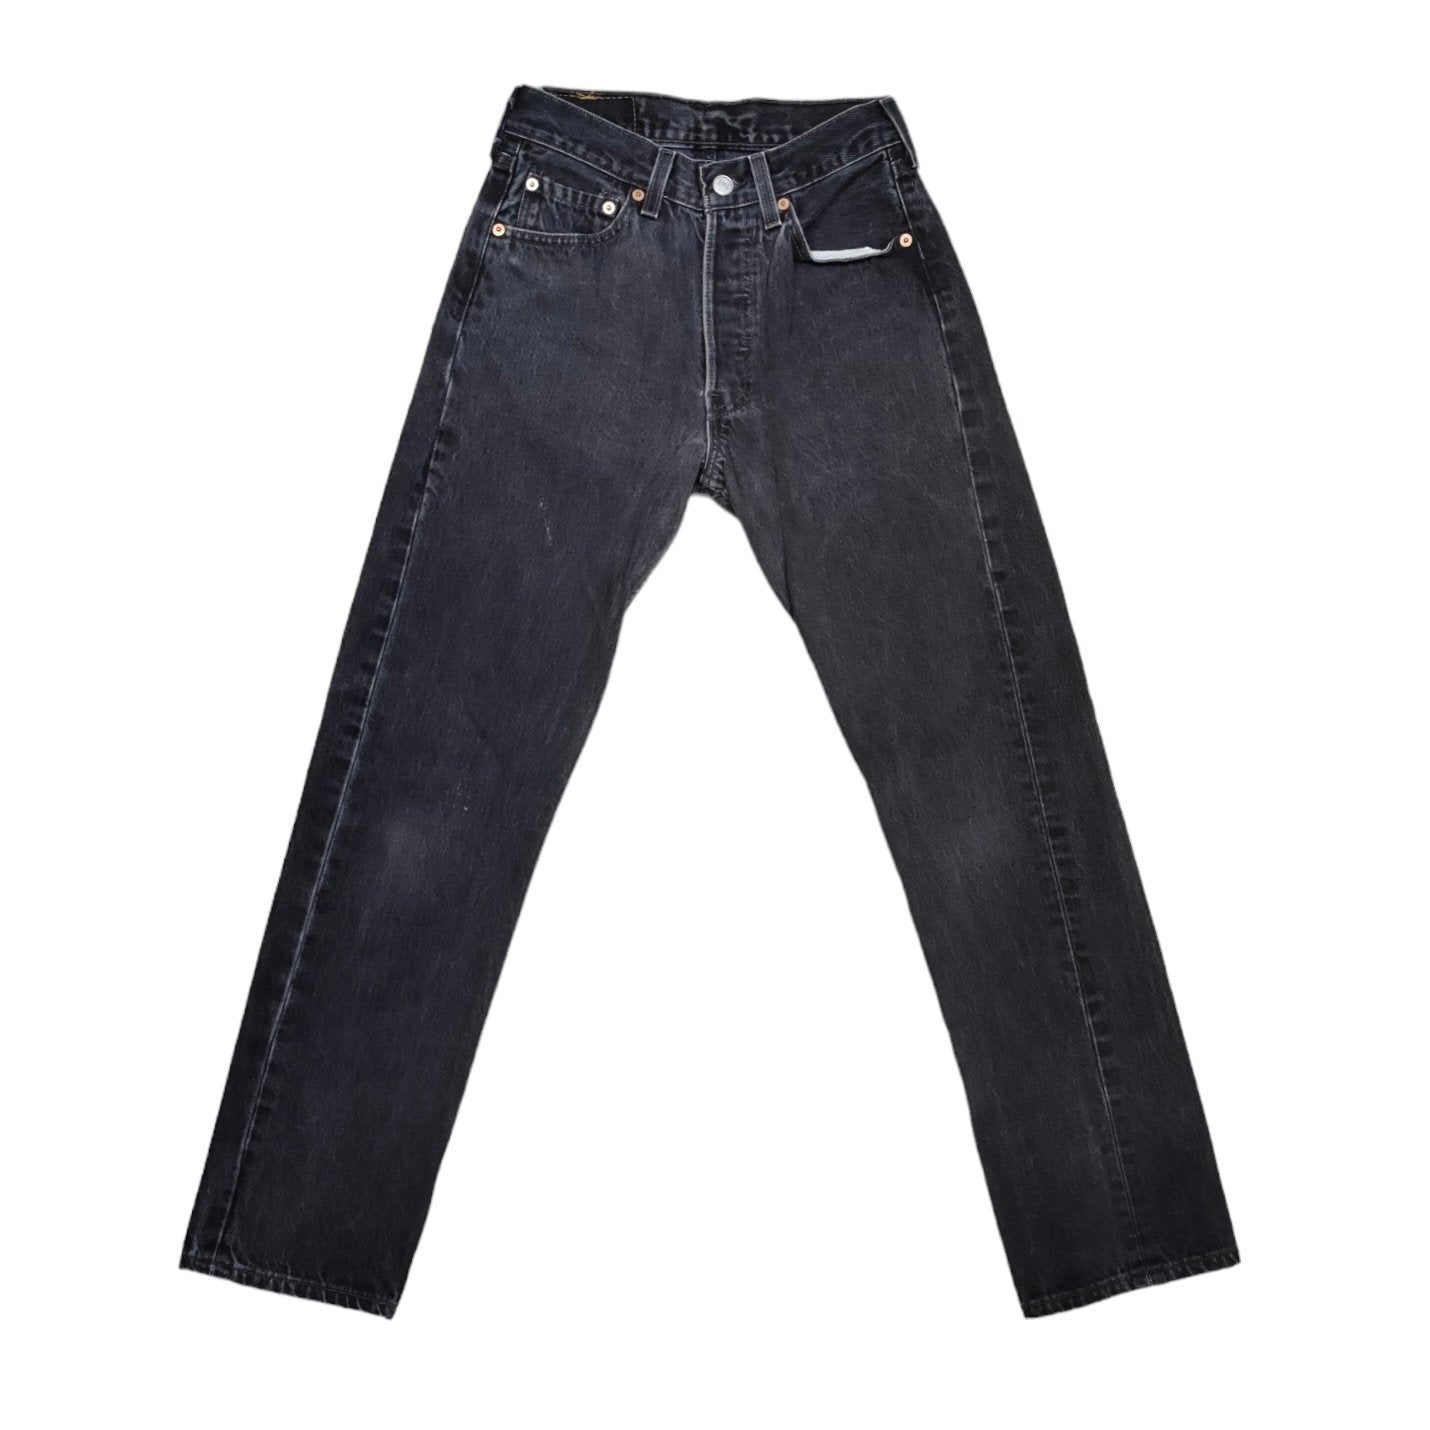 Vintage Levis 501 Black/Grey Jeans (W27/L30)(W)